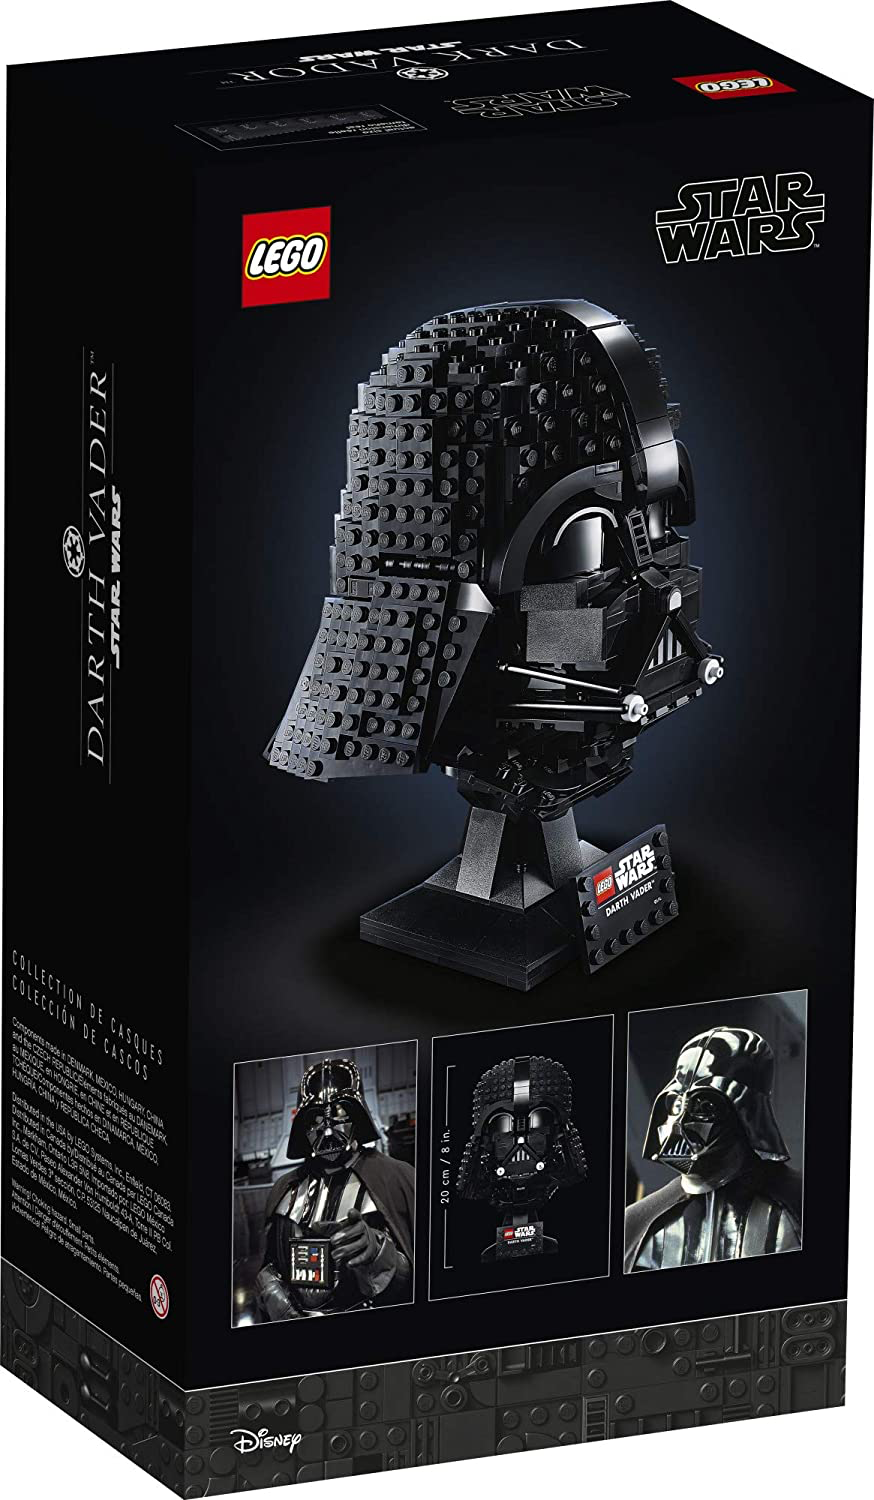 SW Darth Vader Helmet Lego Set 2